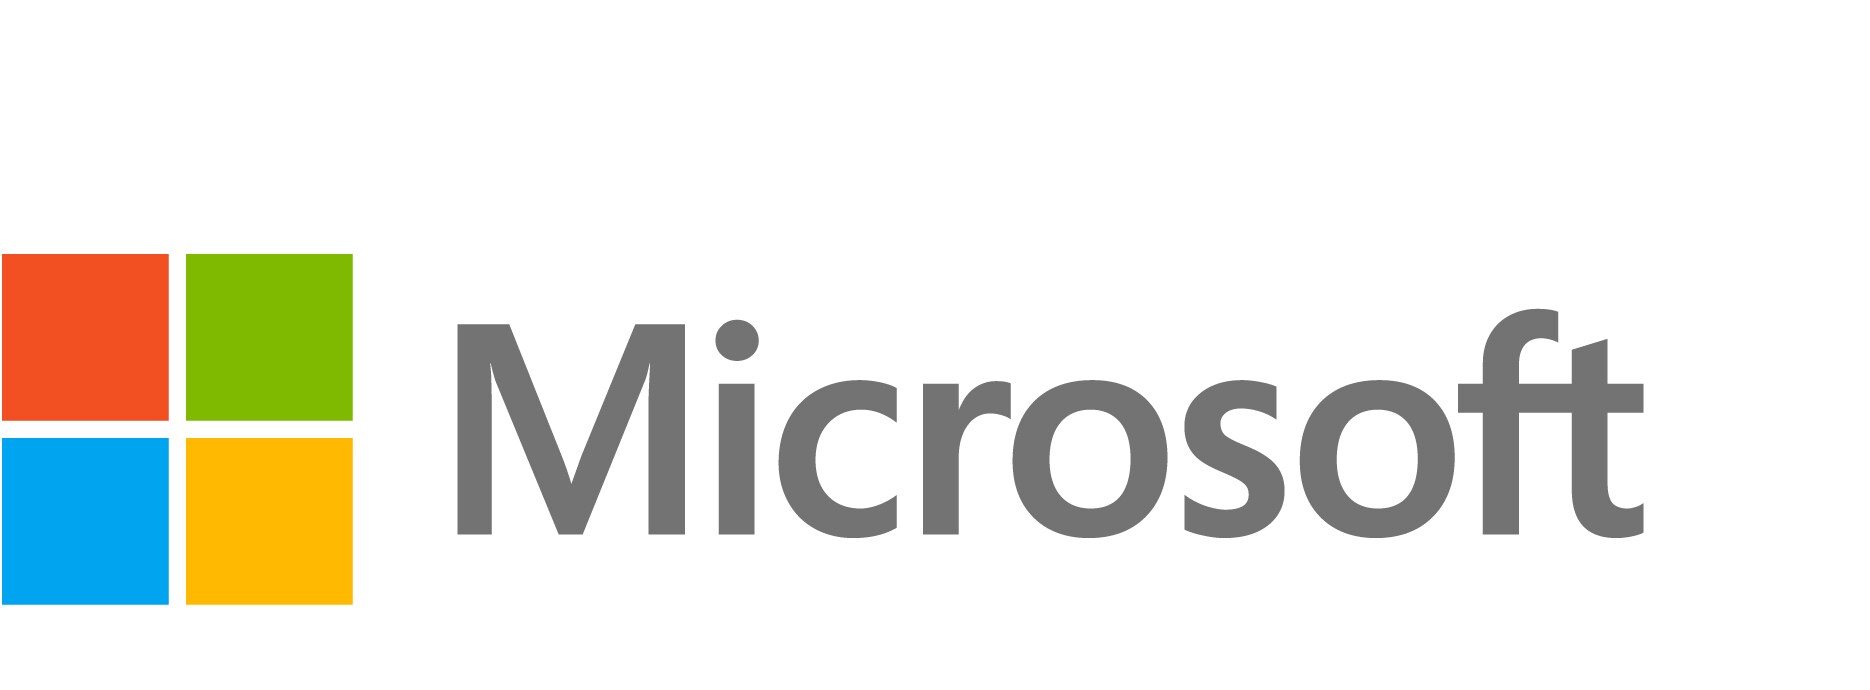 Windows 10/11 Enterprise E5 - subscription license (1 year) - 1 license